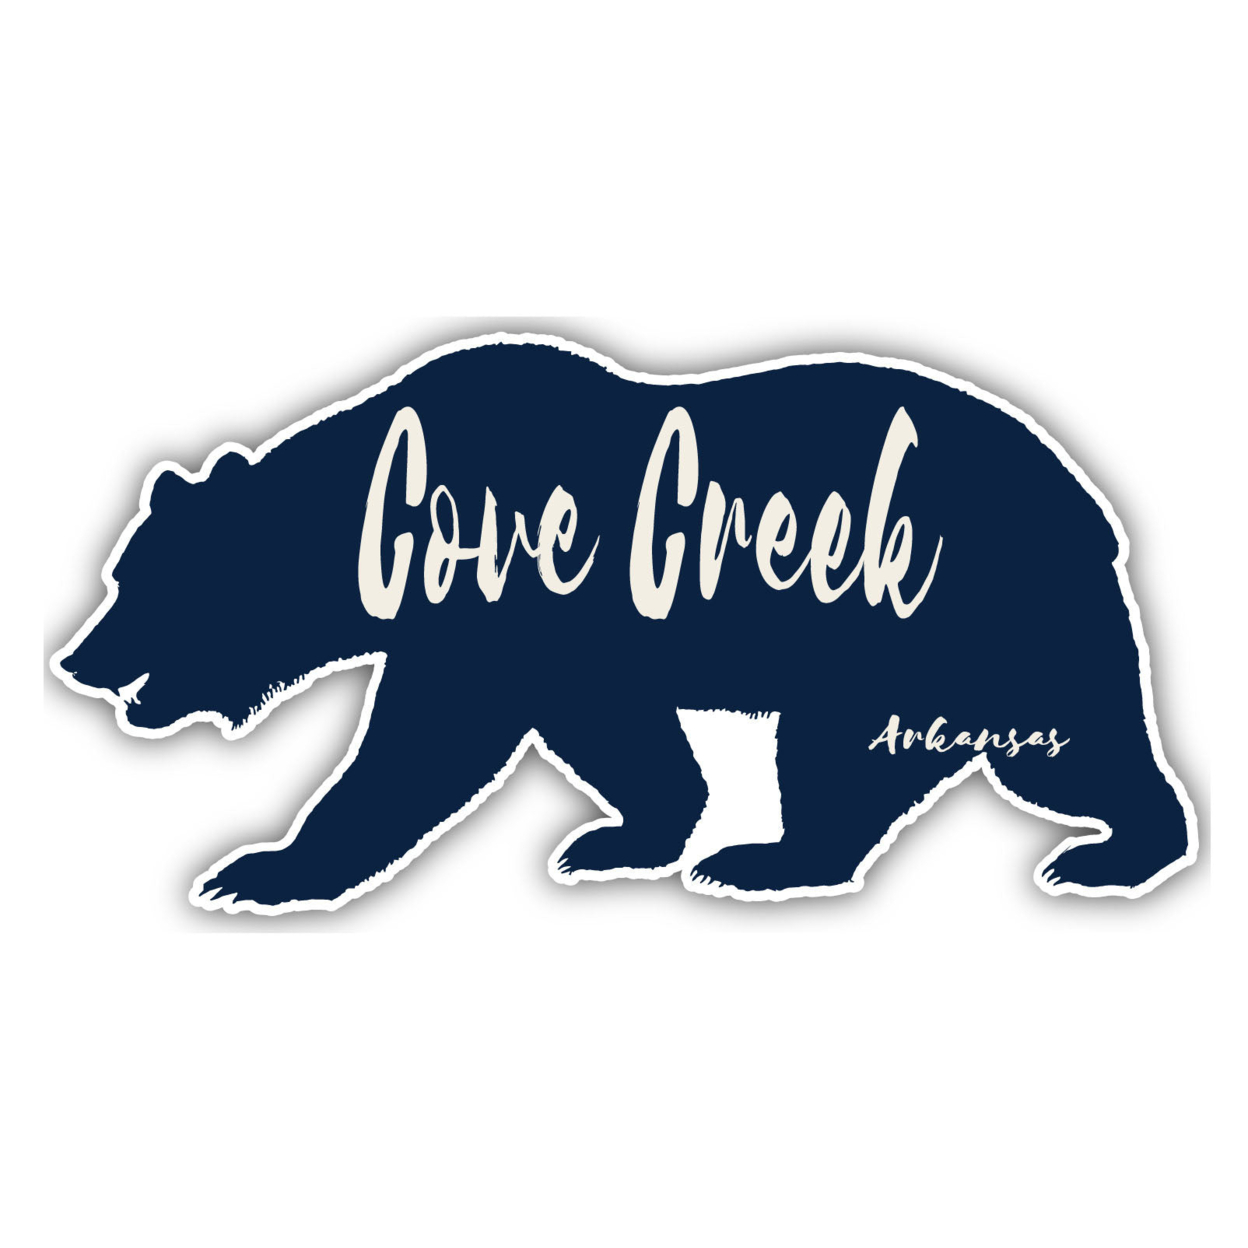 Cove Creek Arkansas Souvenir Decorative Stickers (Choose Theme And Size) - 4-Pack, 4-Inch, Bear